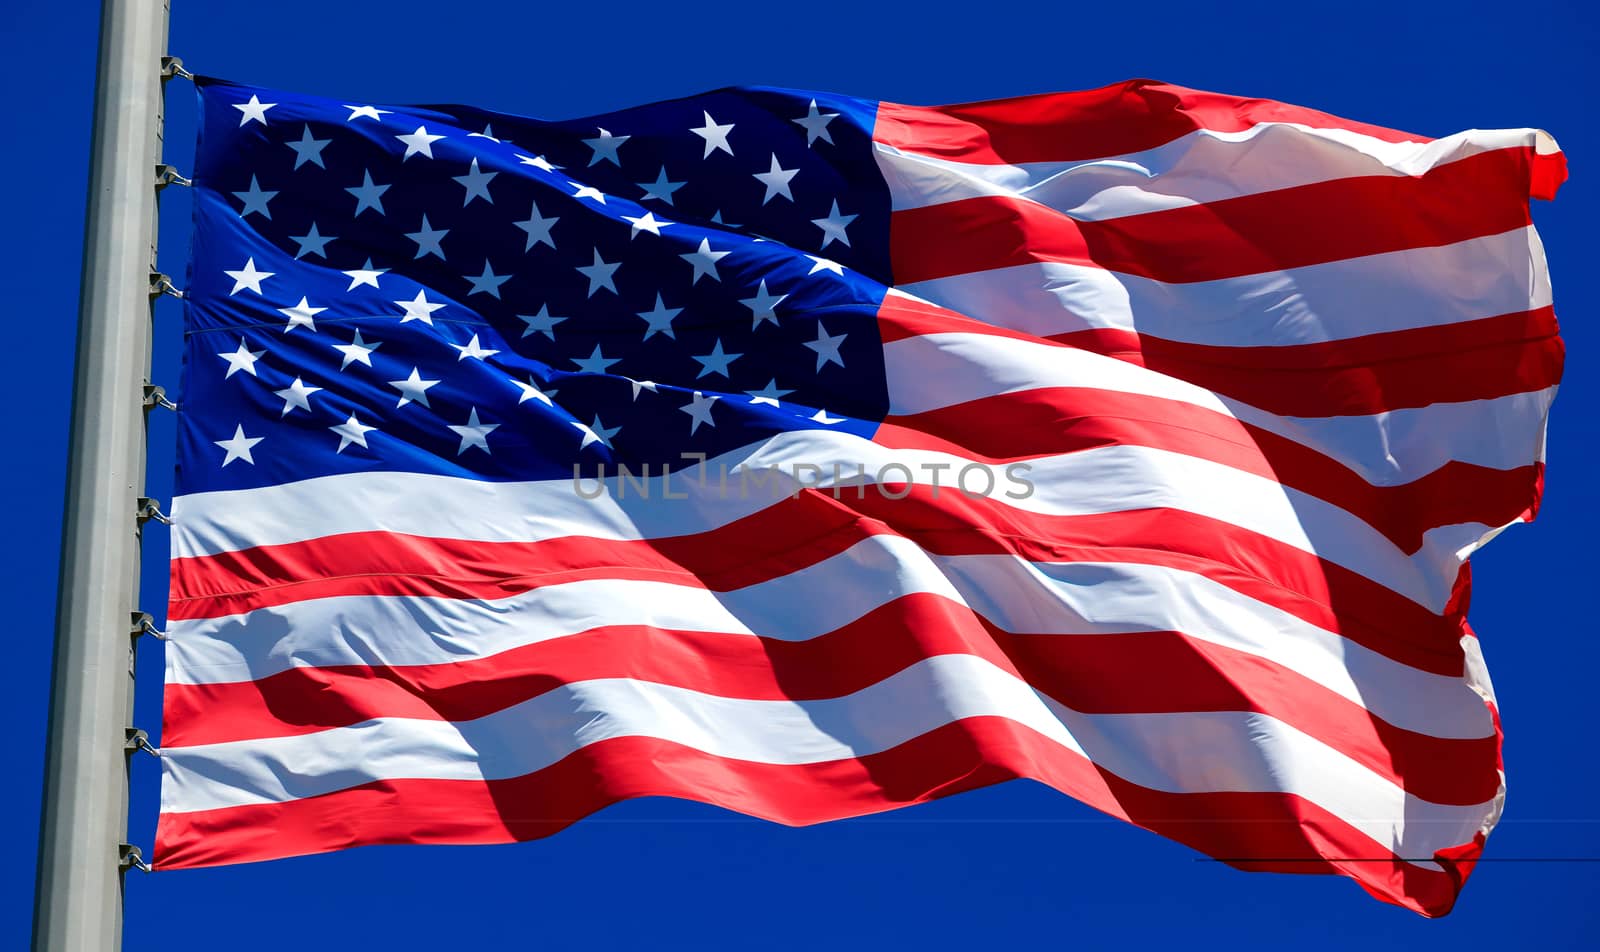 Flag of the USA against a blue sky